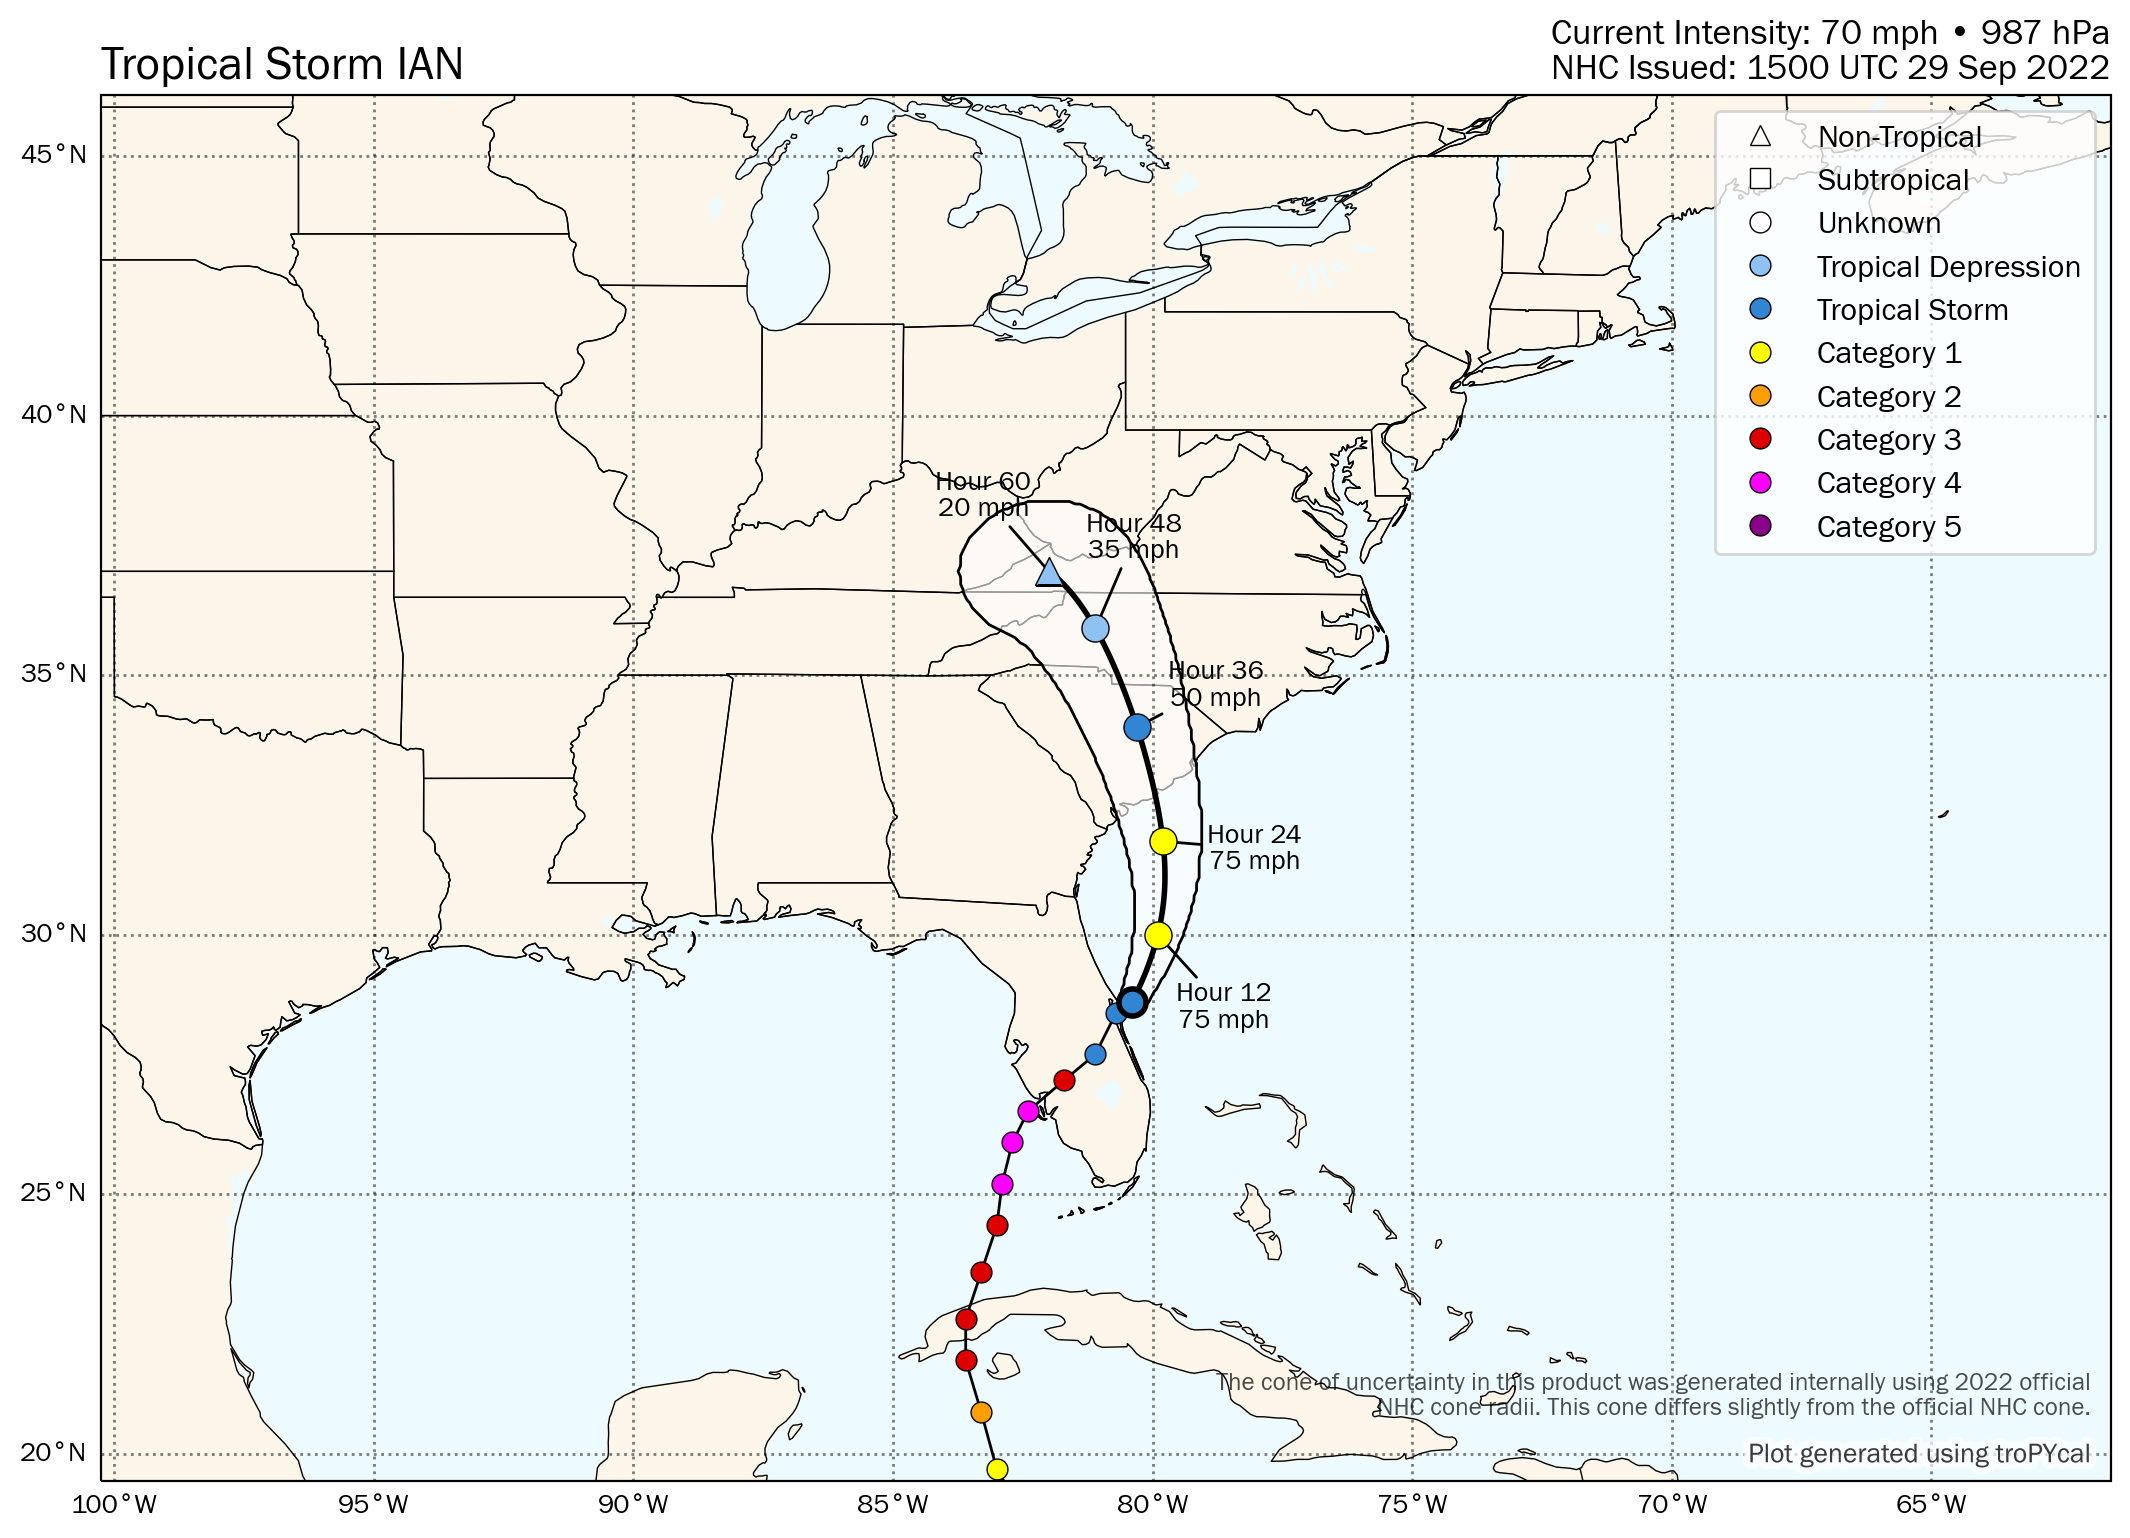 Ian forecast to make second hurricane landfall in South Carolina